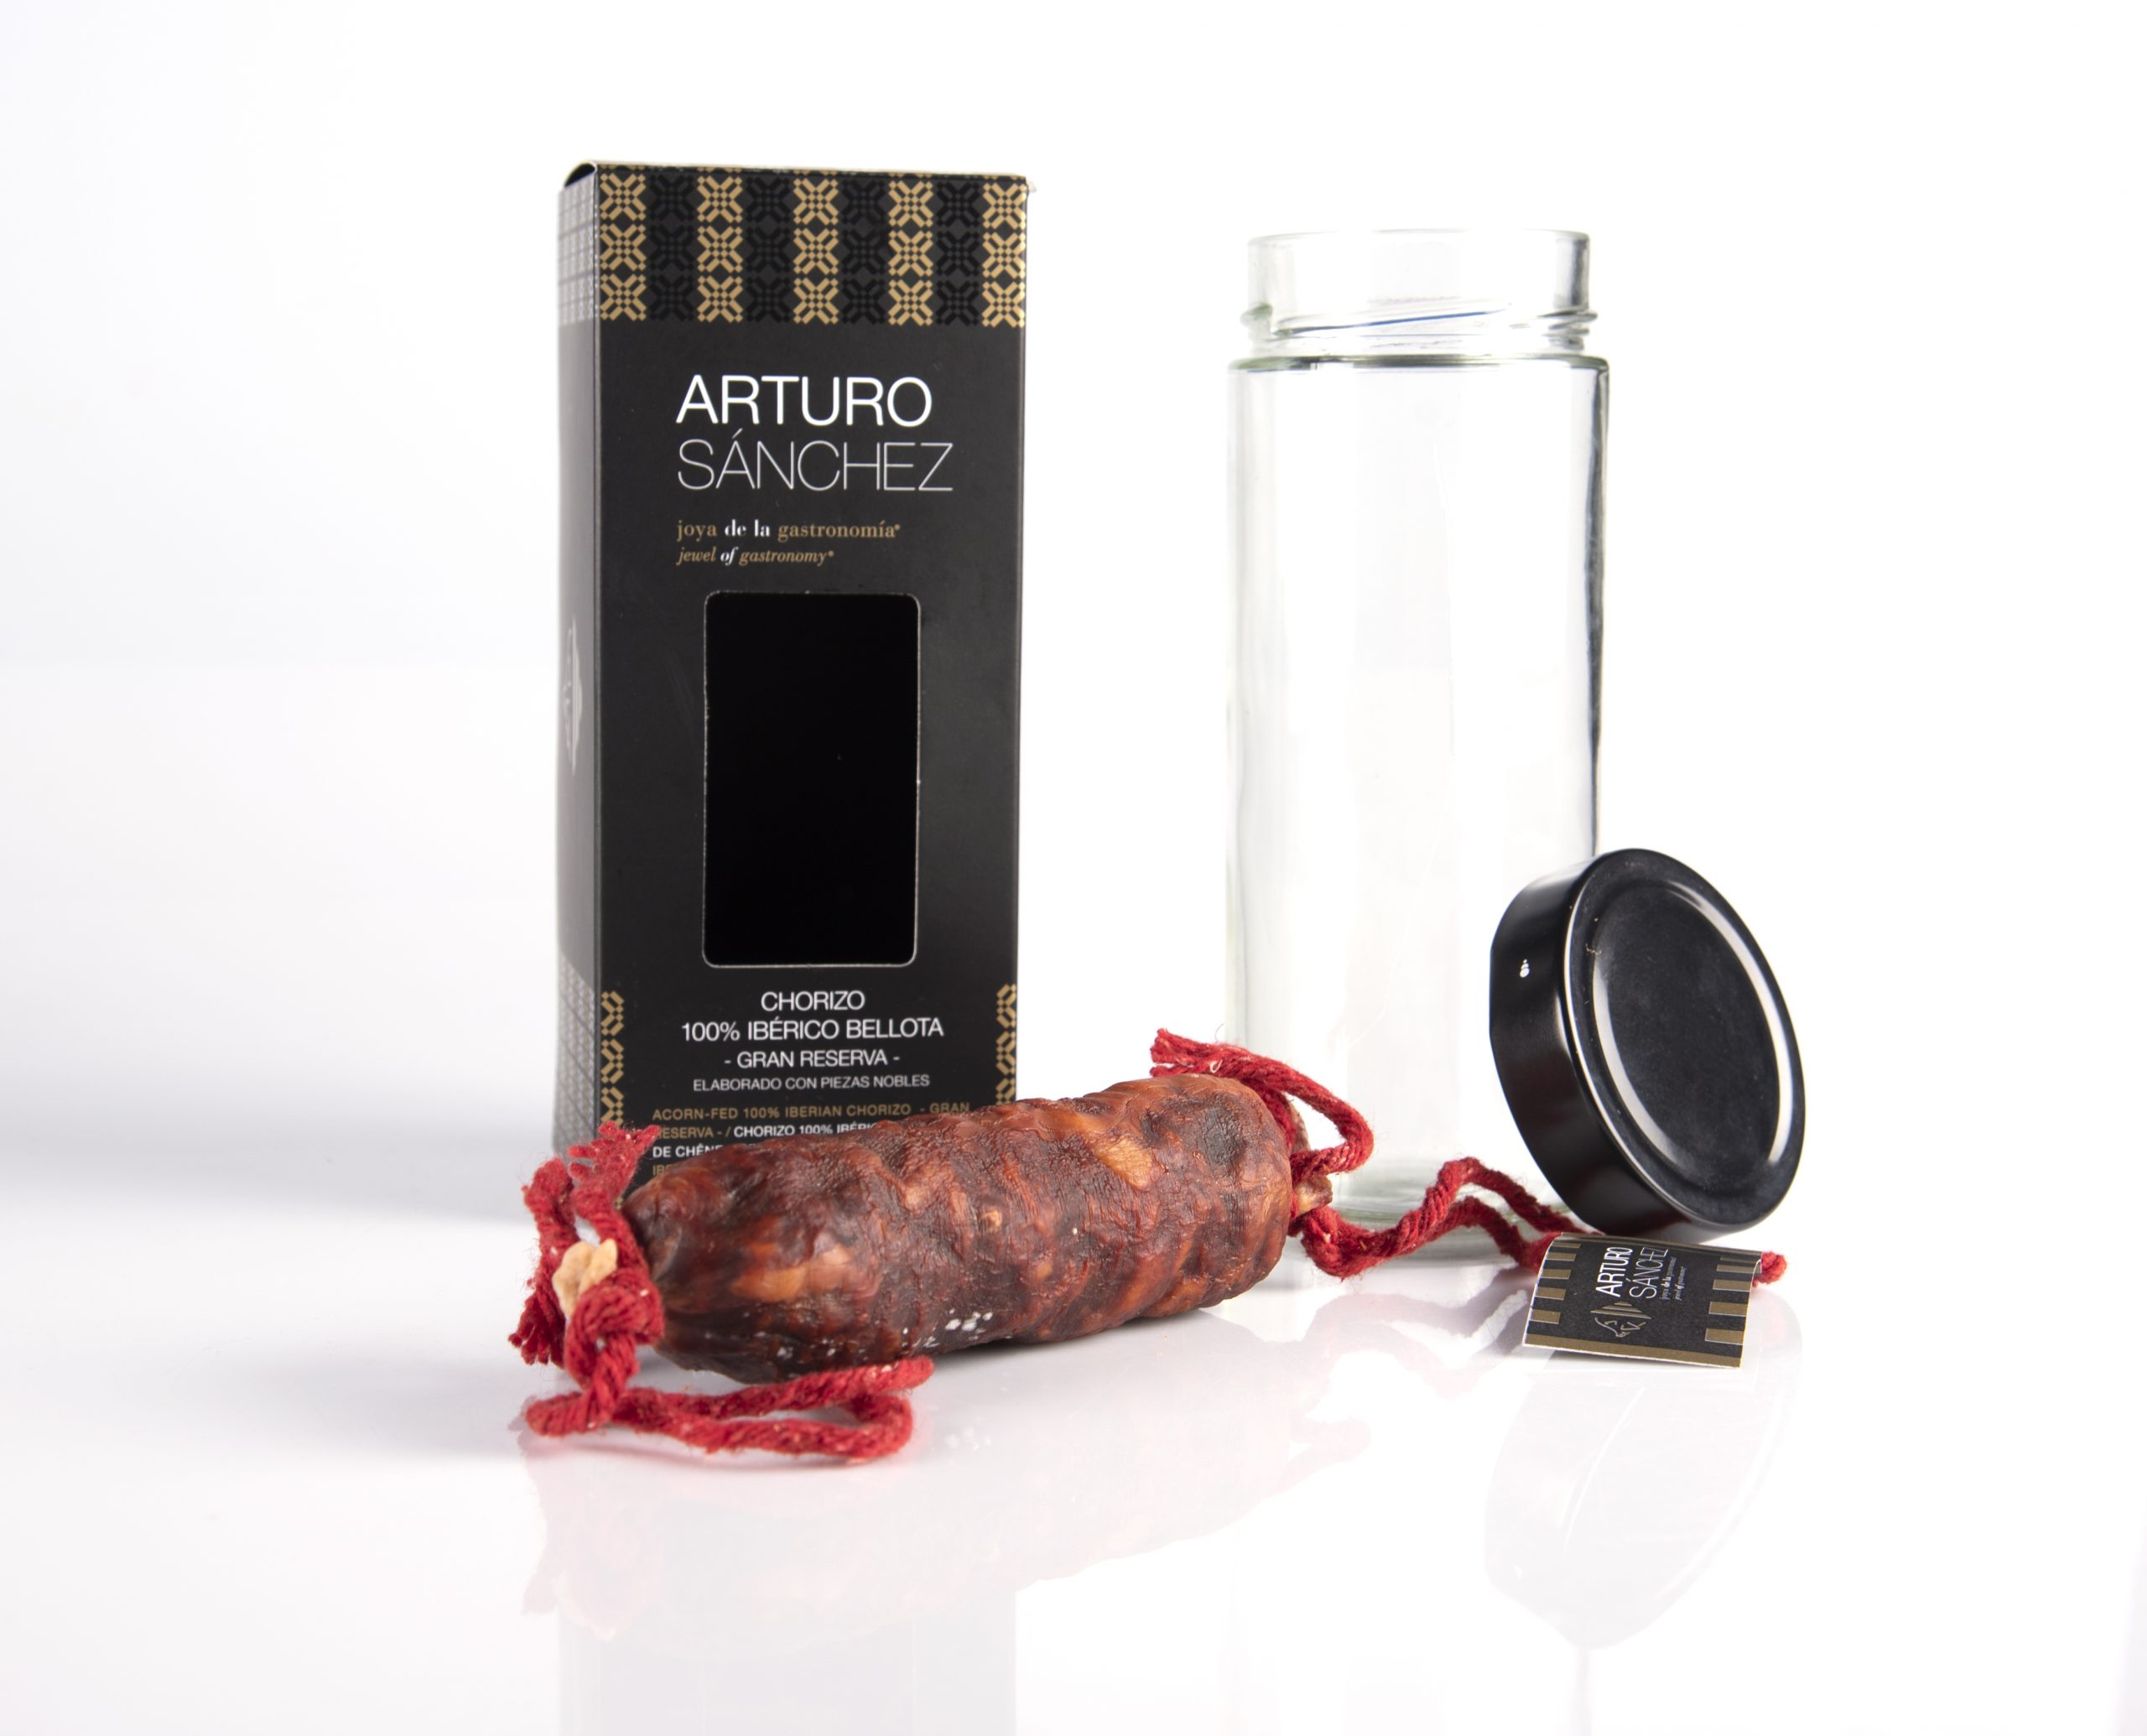 Chorizo ibérico de Bellota Gran Reserva en Tarro de Cristal - Arturo Sánchez